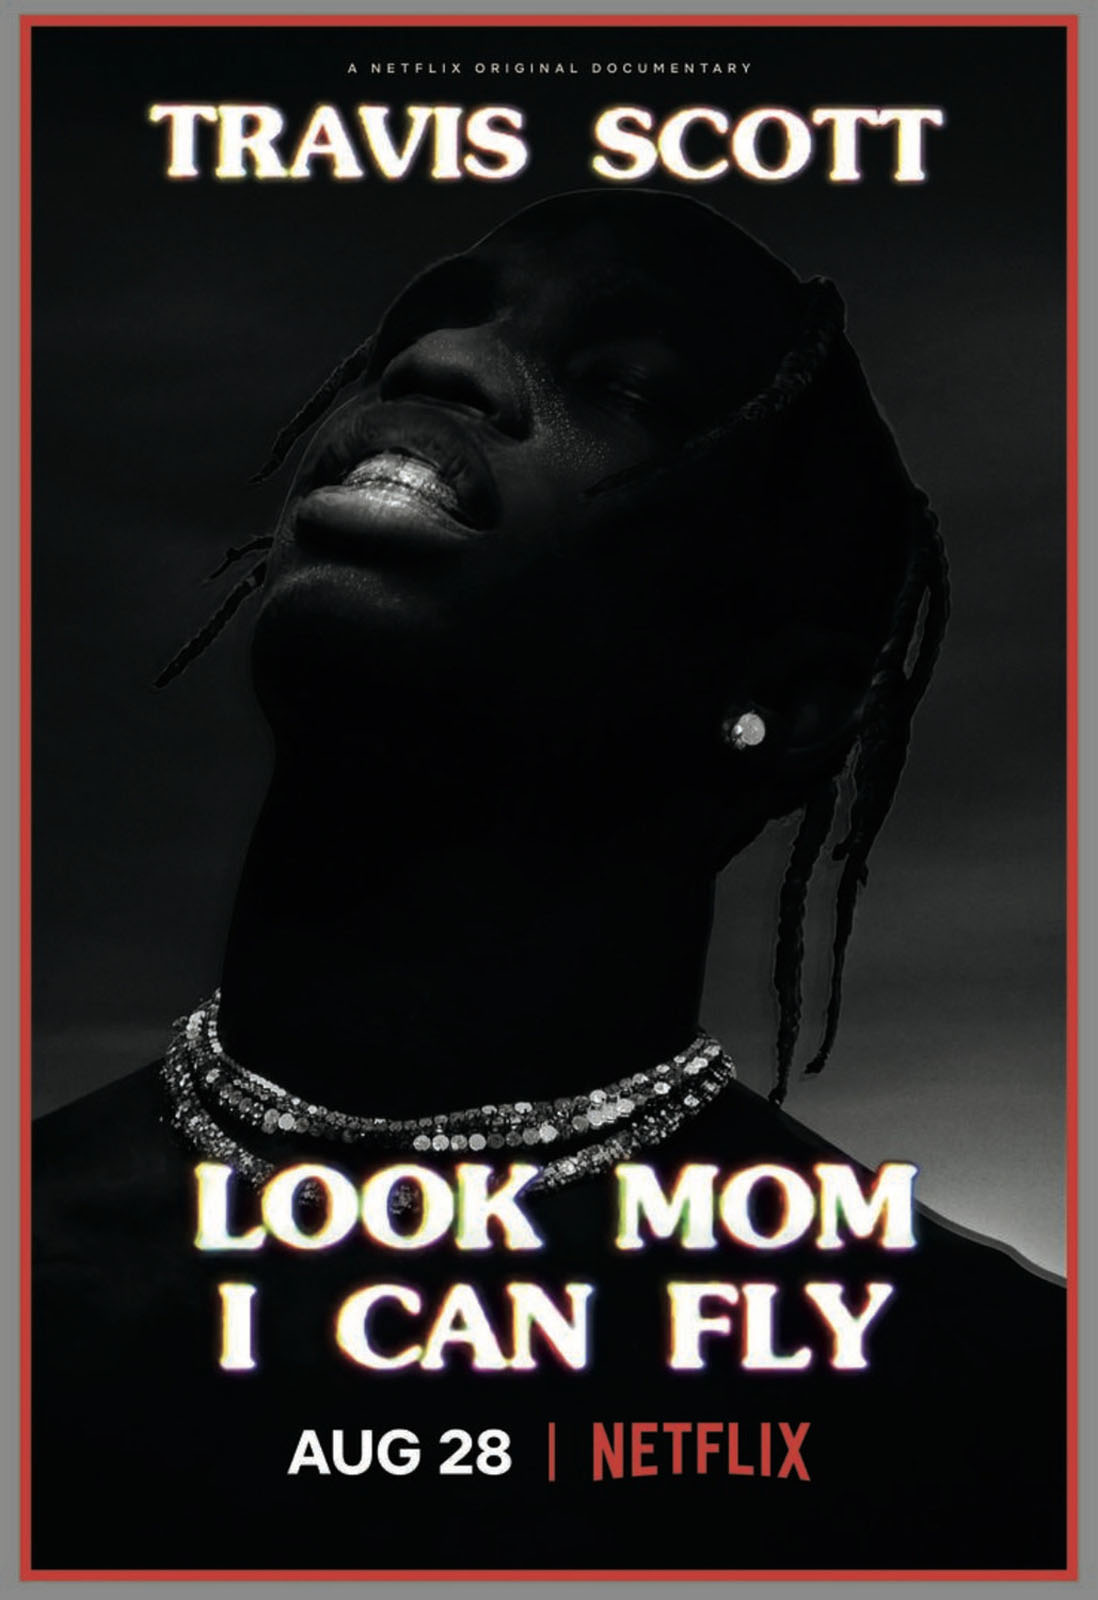 Travis Scott: Look mom i can fly